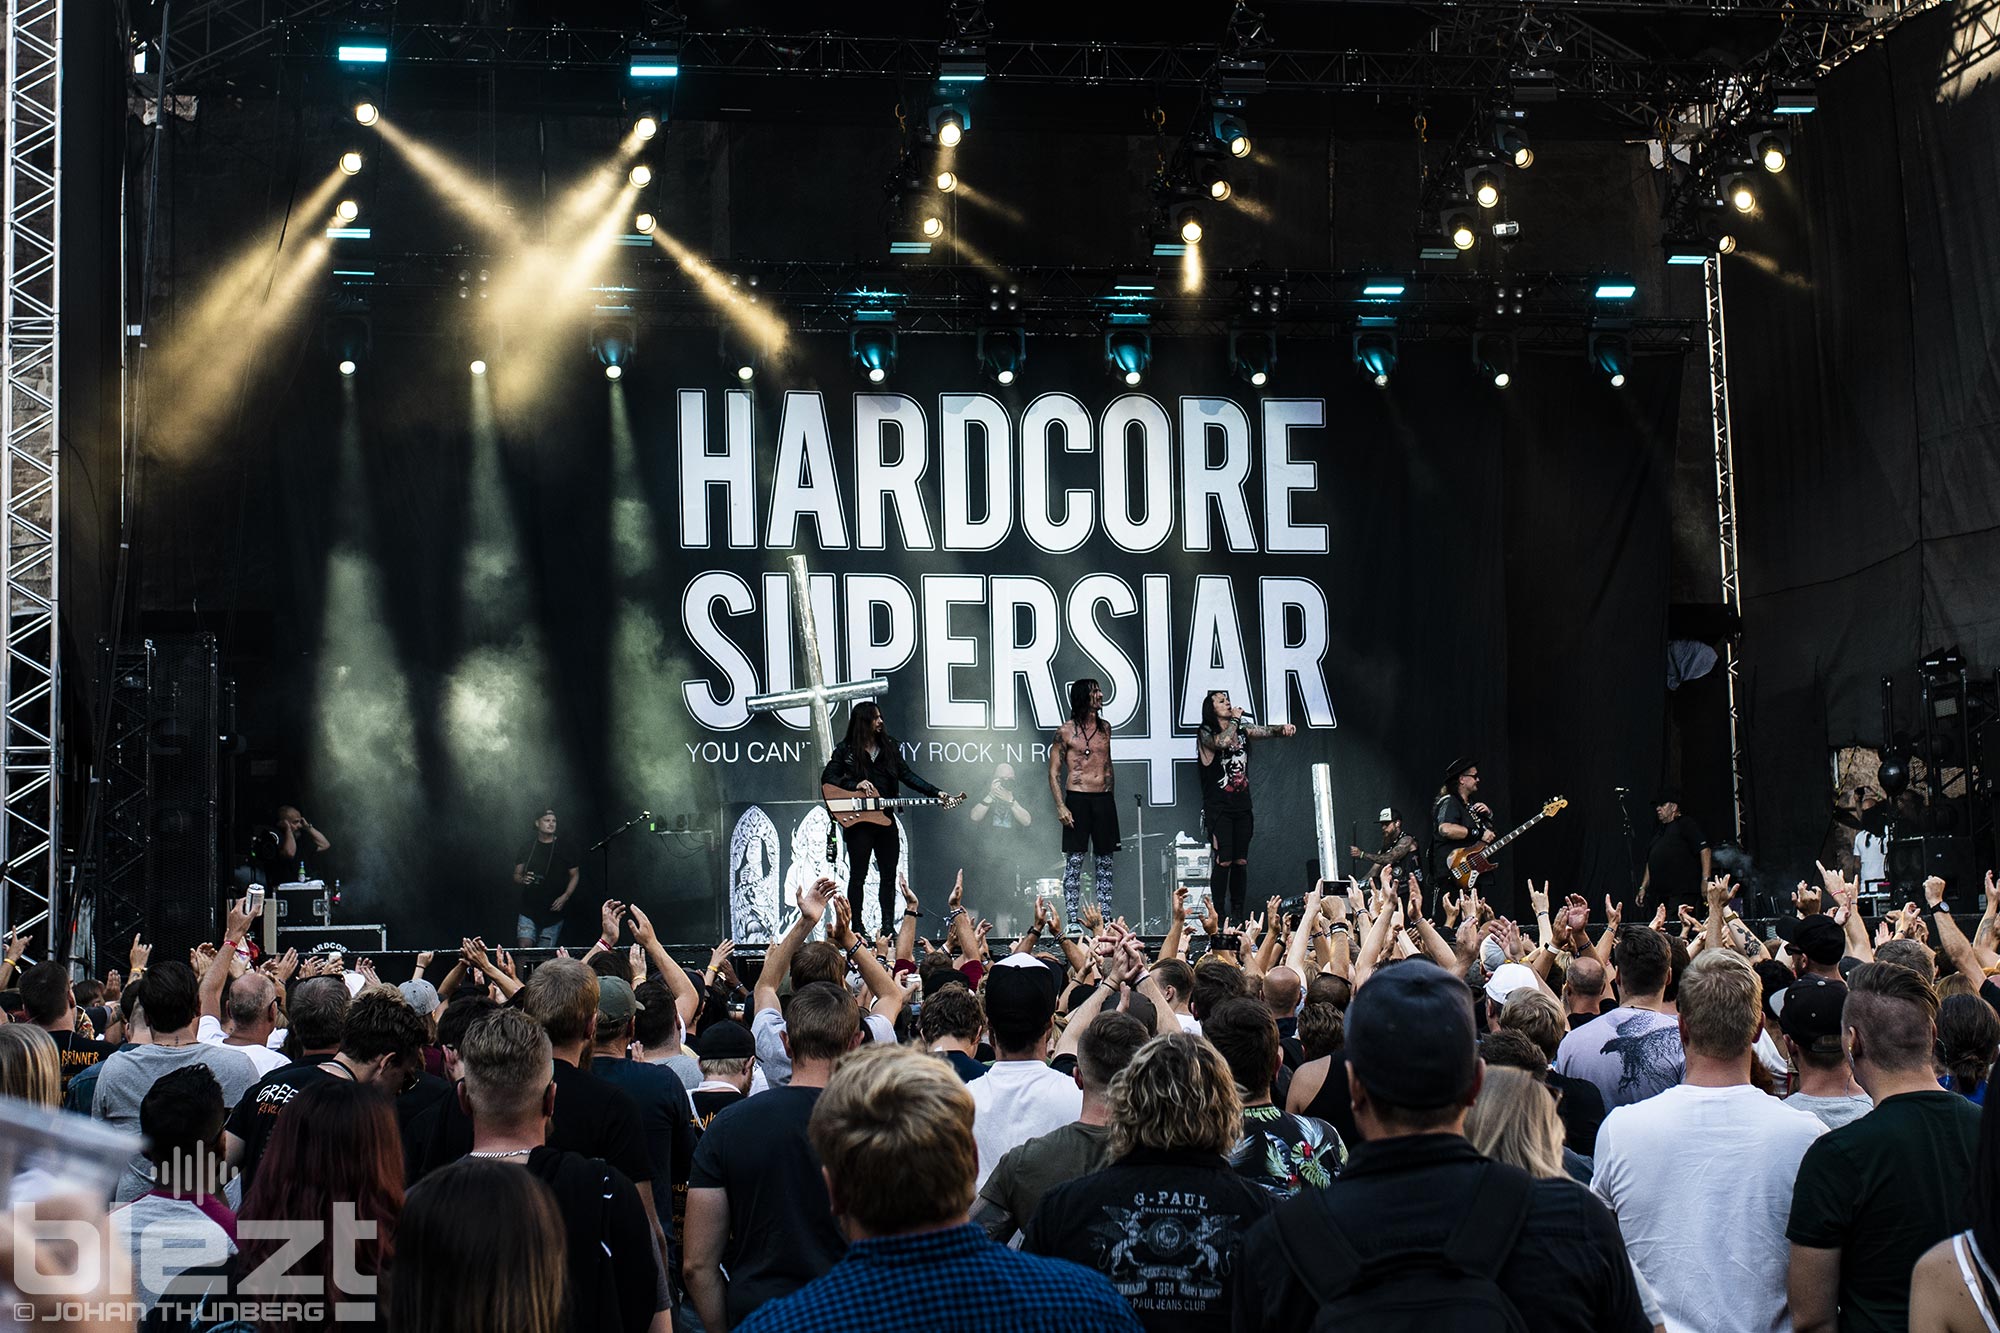 Hardcore Superstar Borgholm Brinner 2019 BLEZT